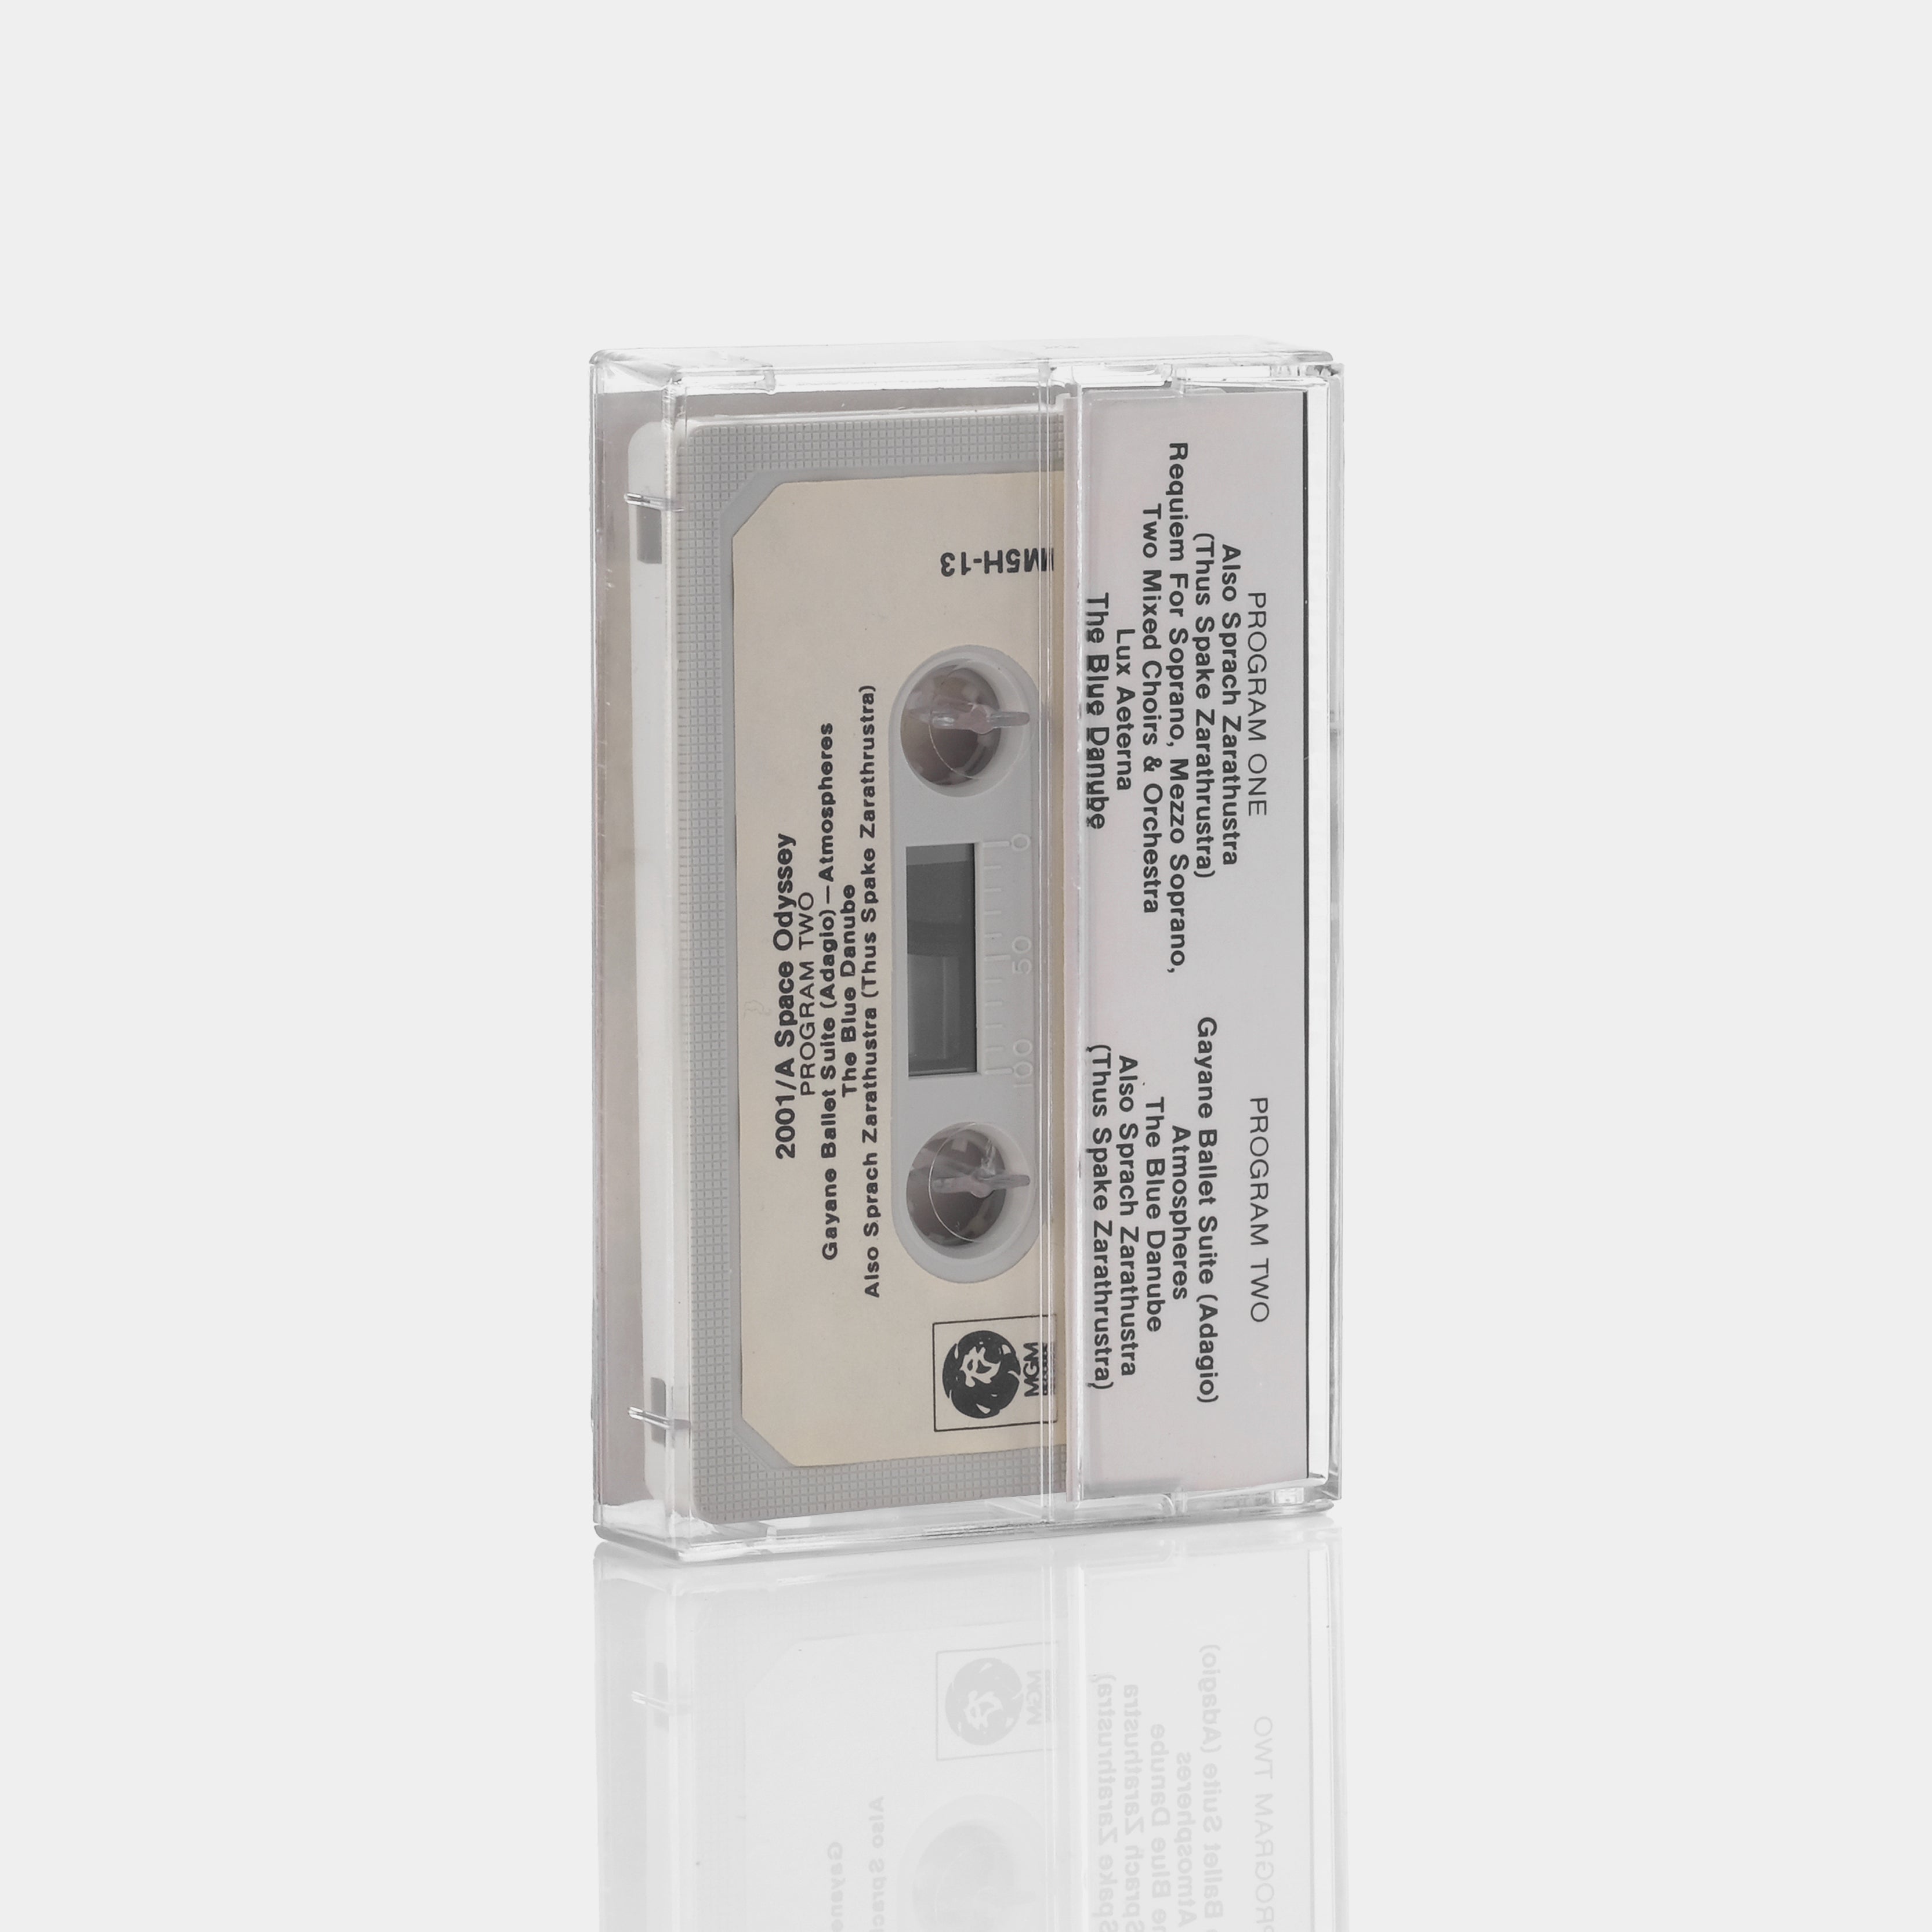 2001: A Space Odyssey (Original Motion Picture Soundtrack) Cassette Tape